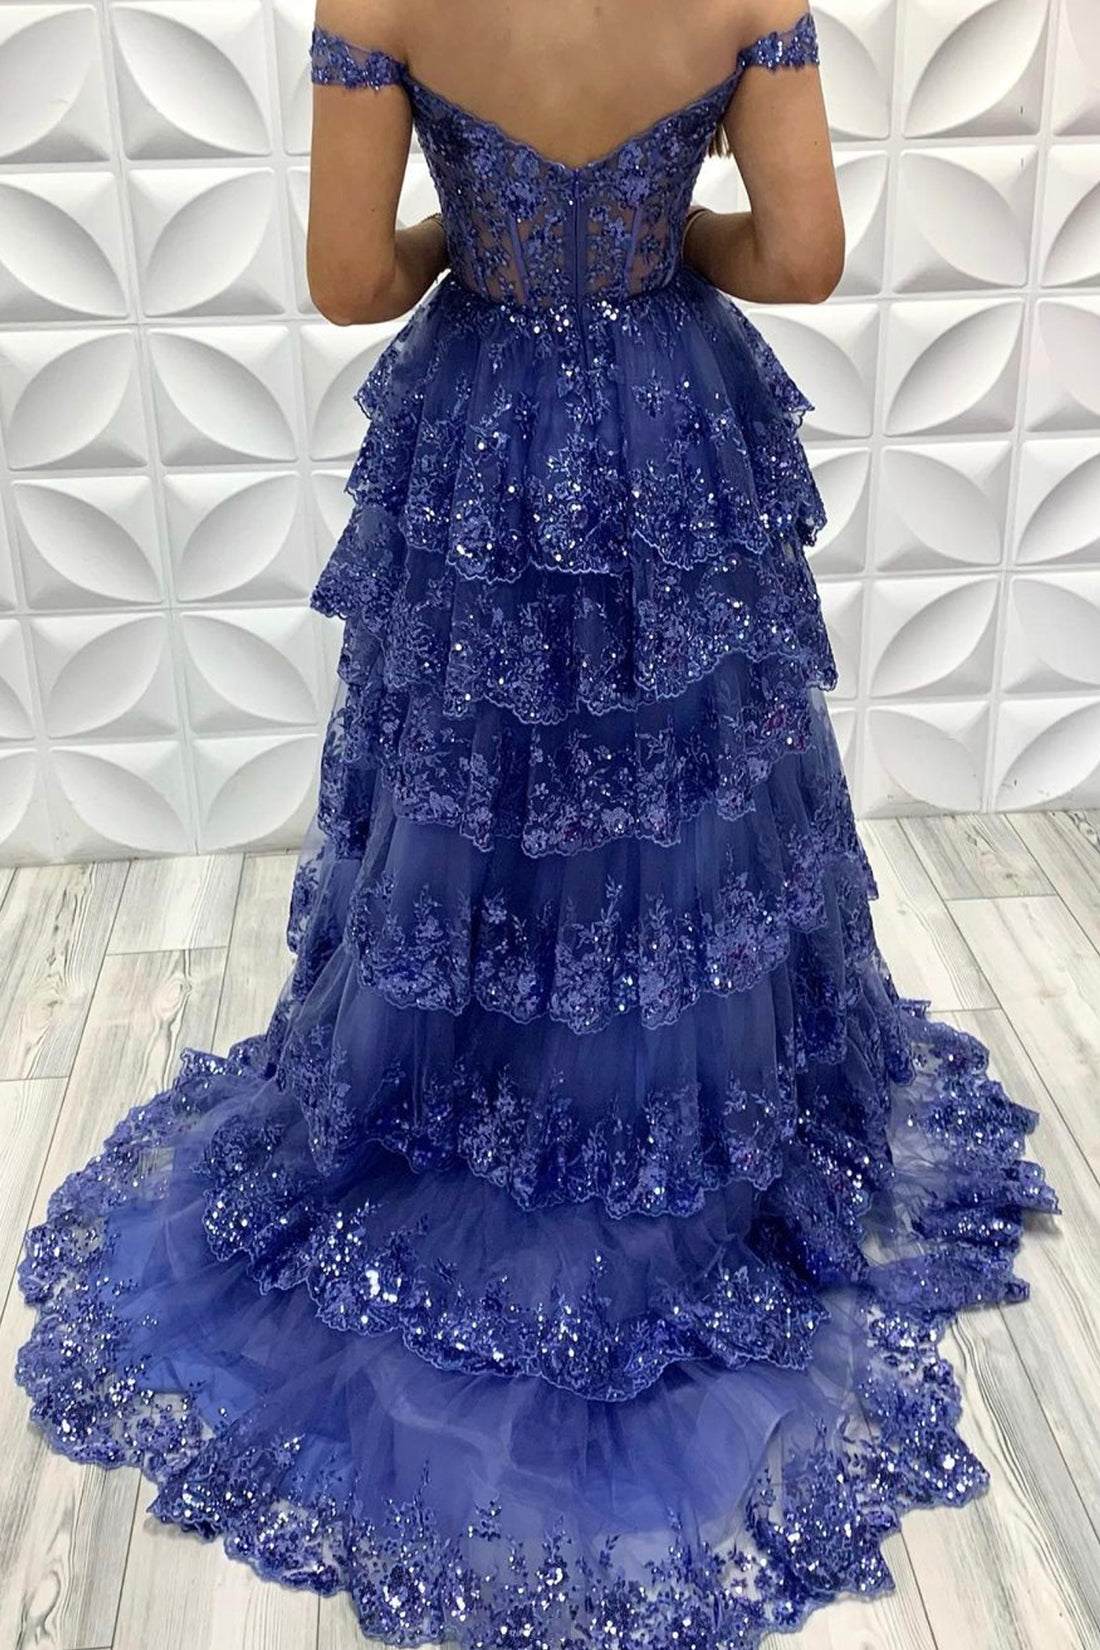 Blue Spaghetti Straps V-Neck Prom Dress with Lace, Blue Evening Dress